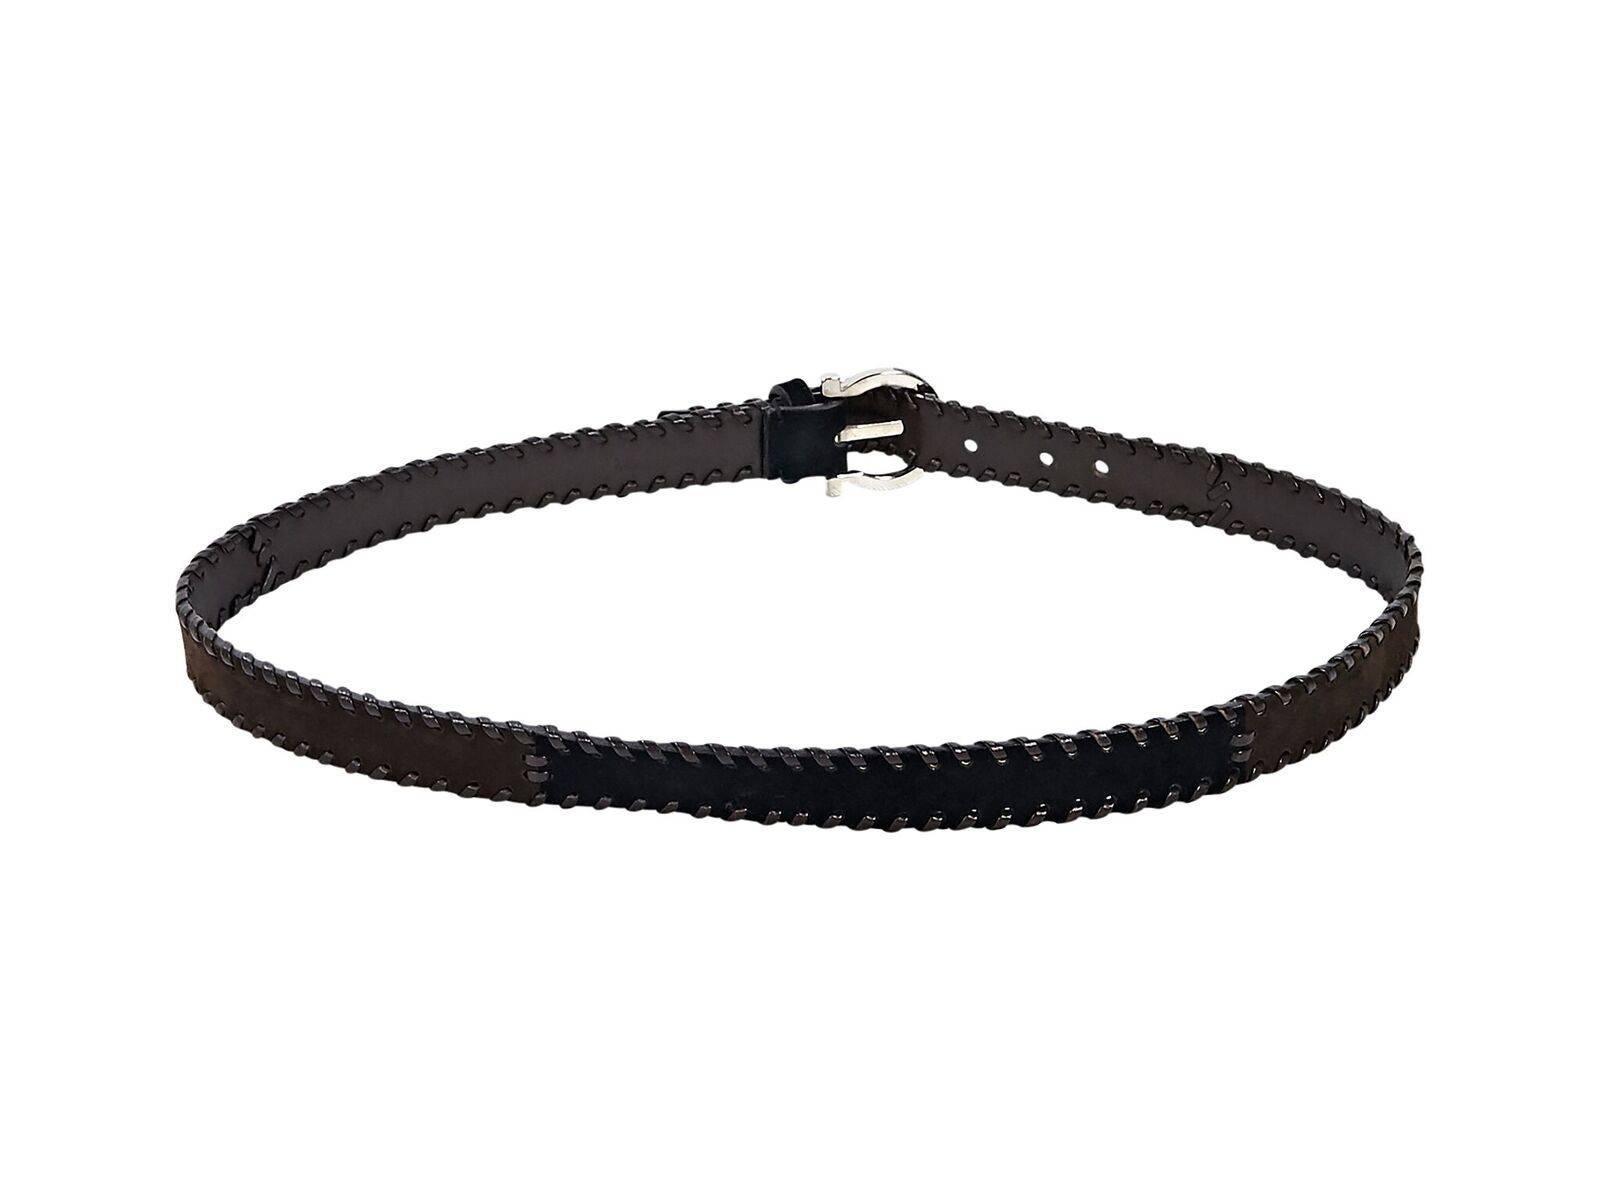 Product details:  Brown suede belt by Salvatore Ferragamo.  Leather whipstitched trim.  Adjustable buckle closure.  Silvertone hardware.  36